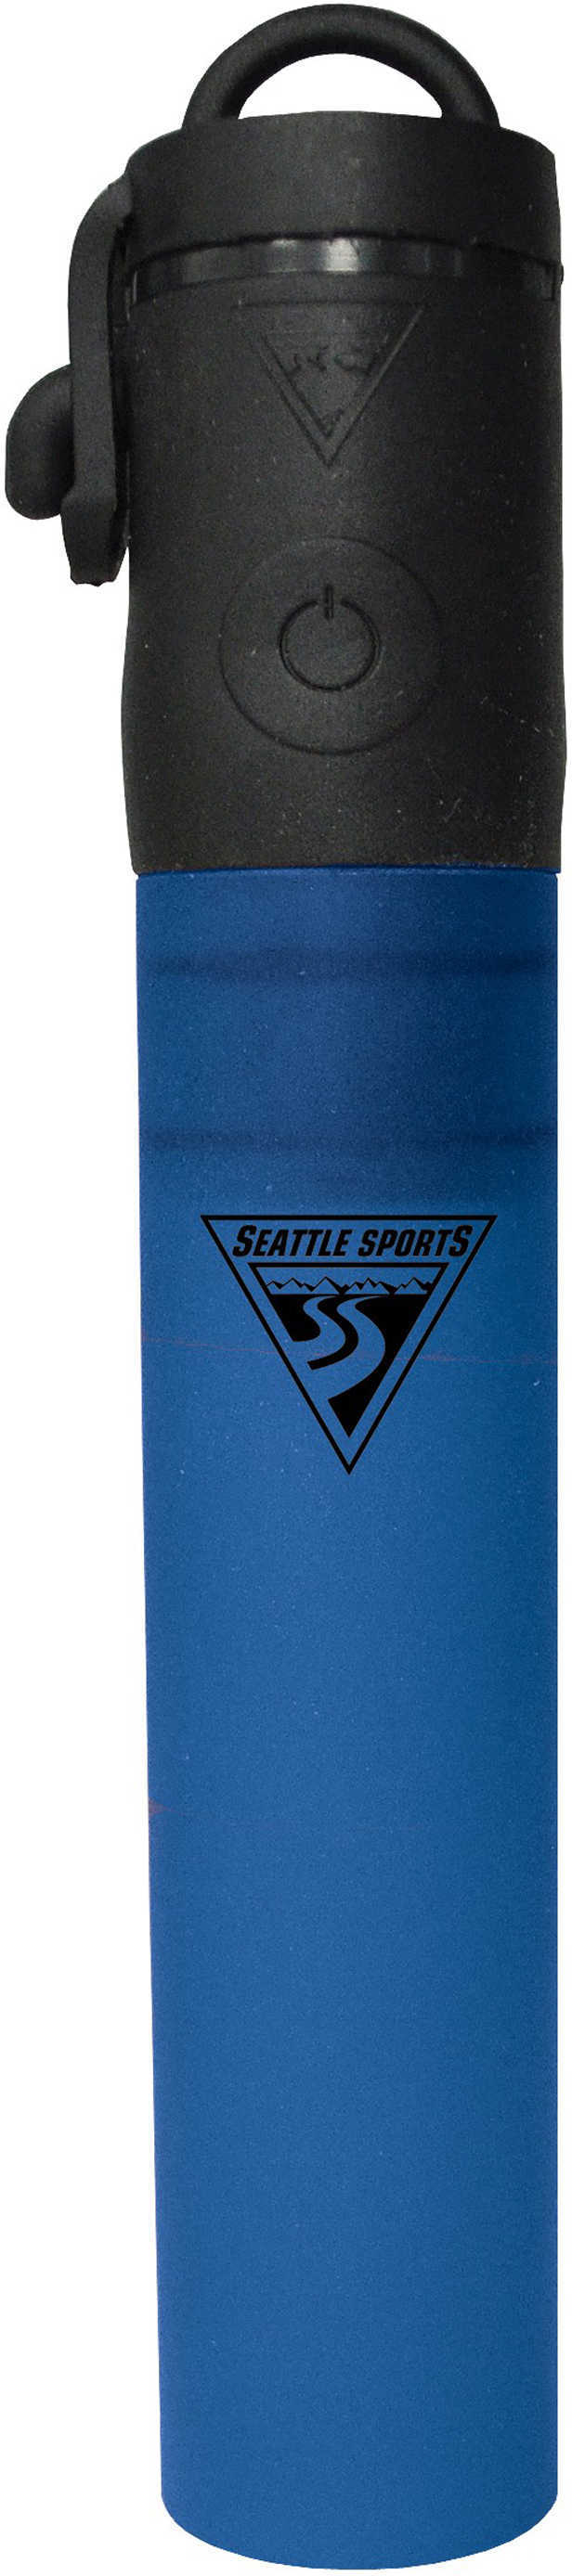 GloStick USB Blue Md: 053492 Seattle Sports